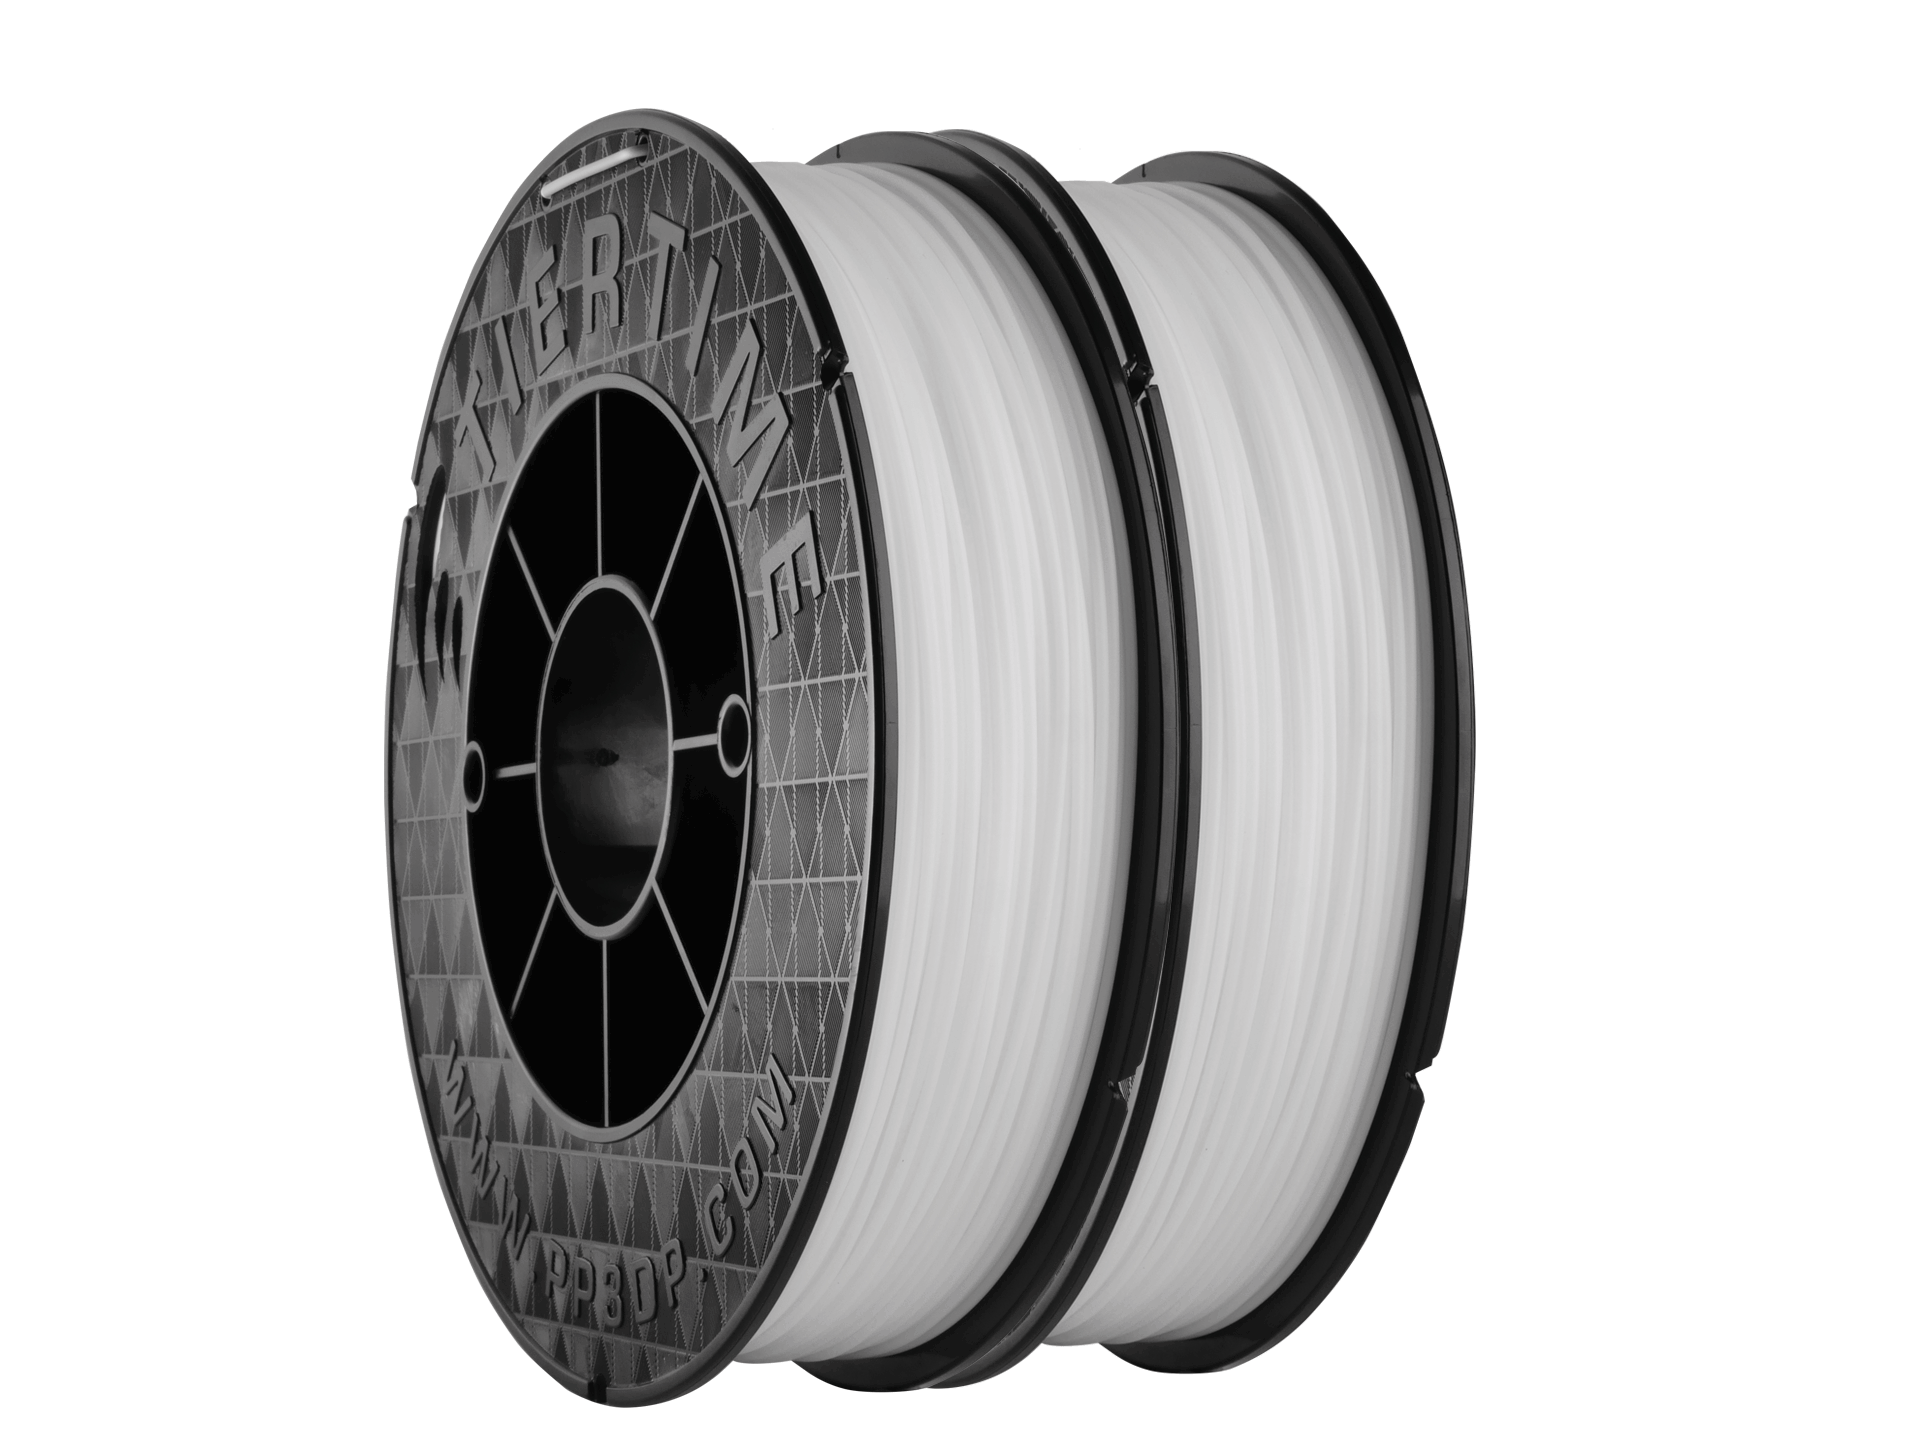 Filament ABS UP constructeur - Noir Ø 1,75 mm 0,5kg